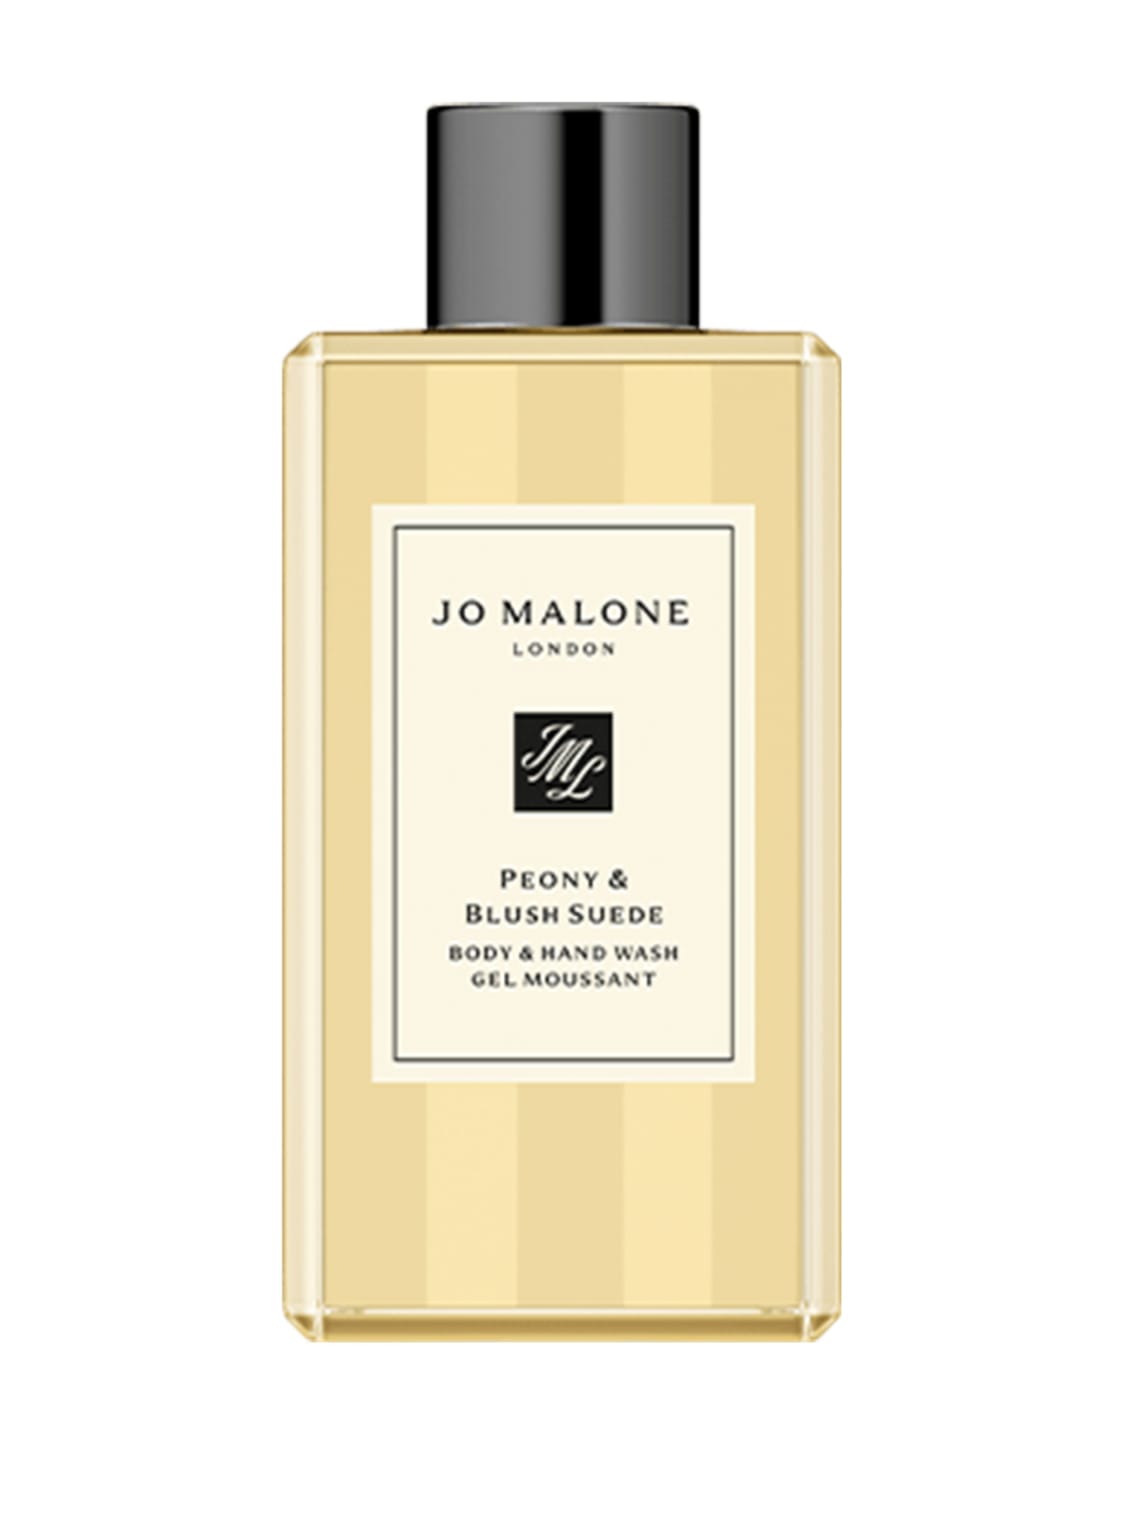 Jo Malone London Peony & Blush Suede Körper- und Handwaschgel 100 ml von Jo Malone London